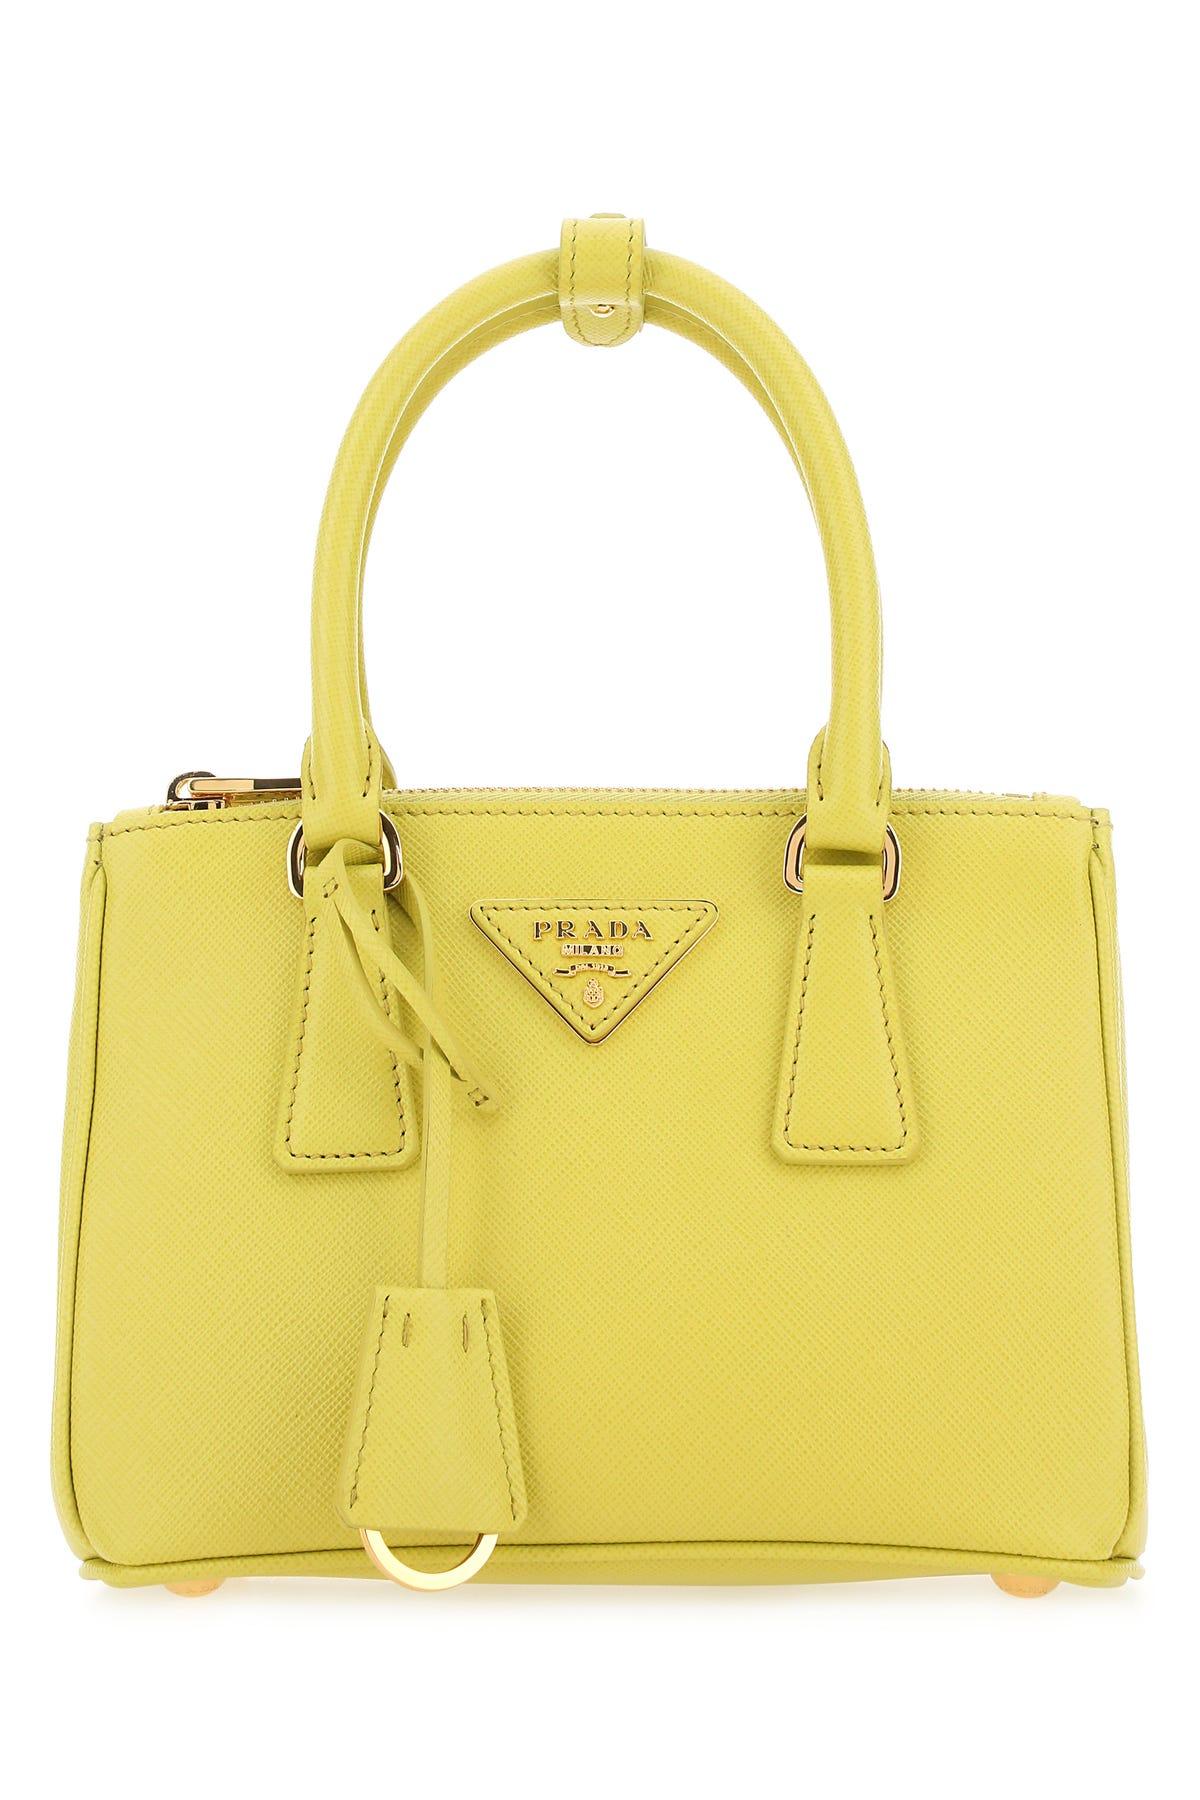 Prada Yellow Leather Handbag | Lyst